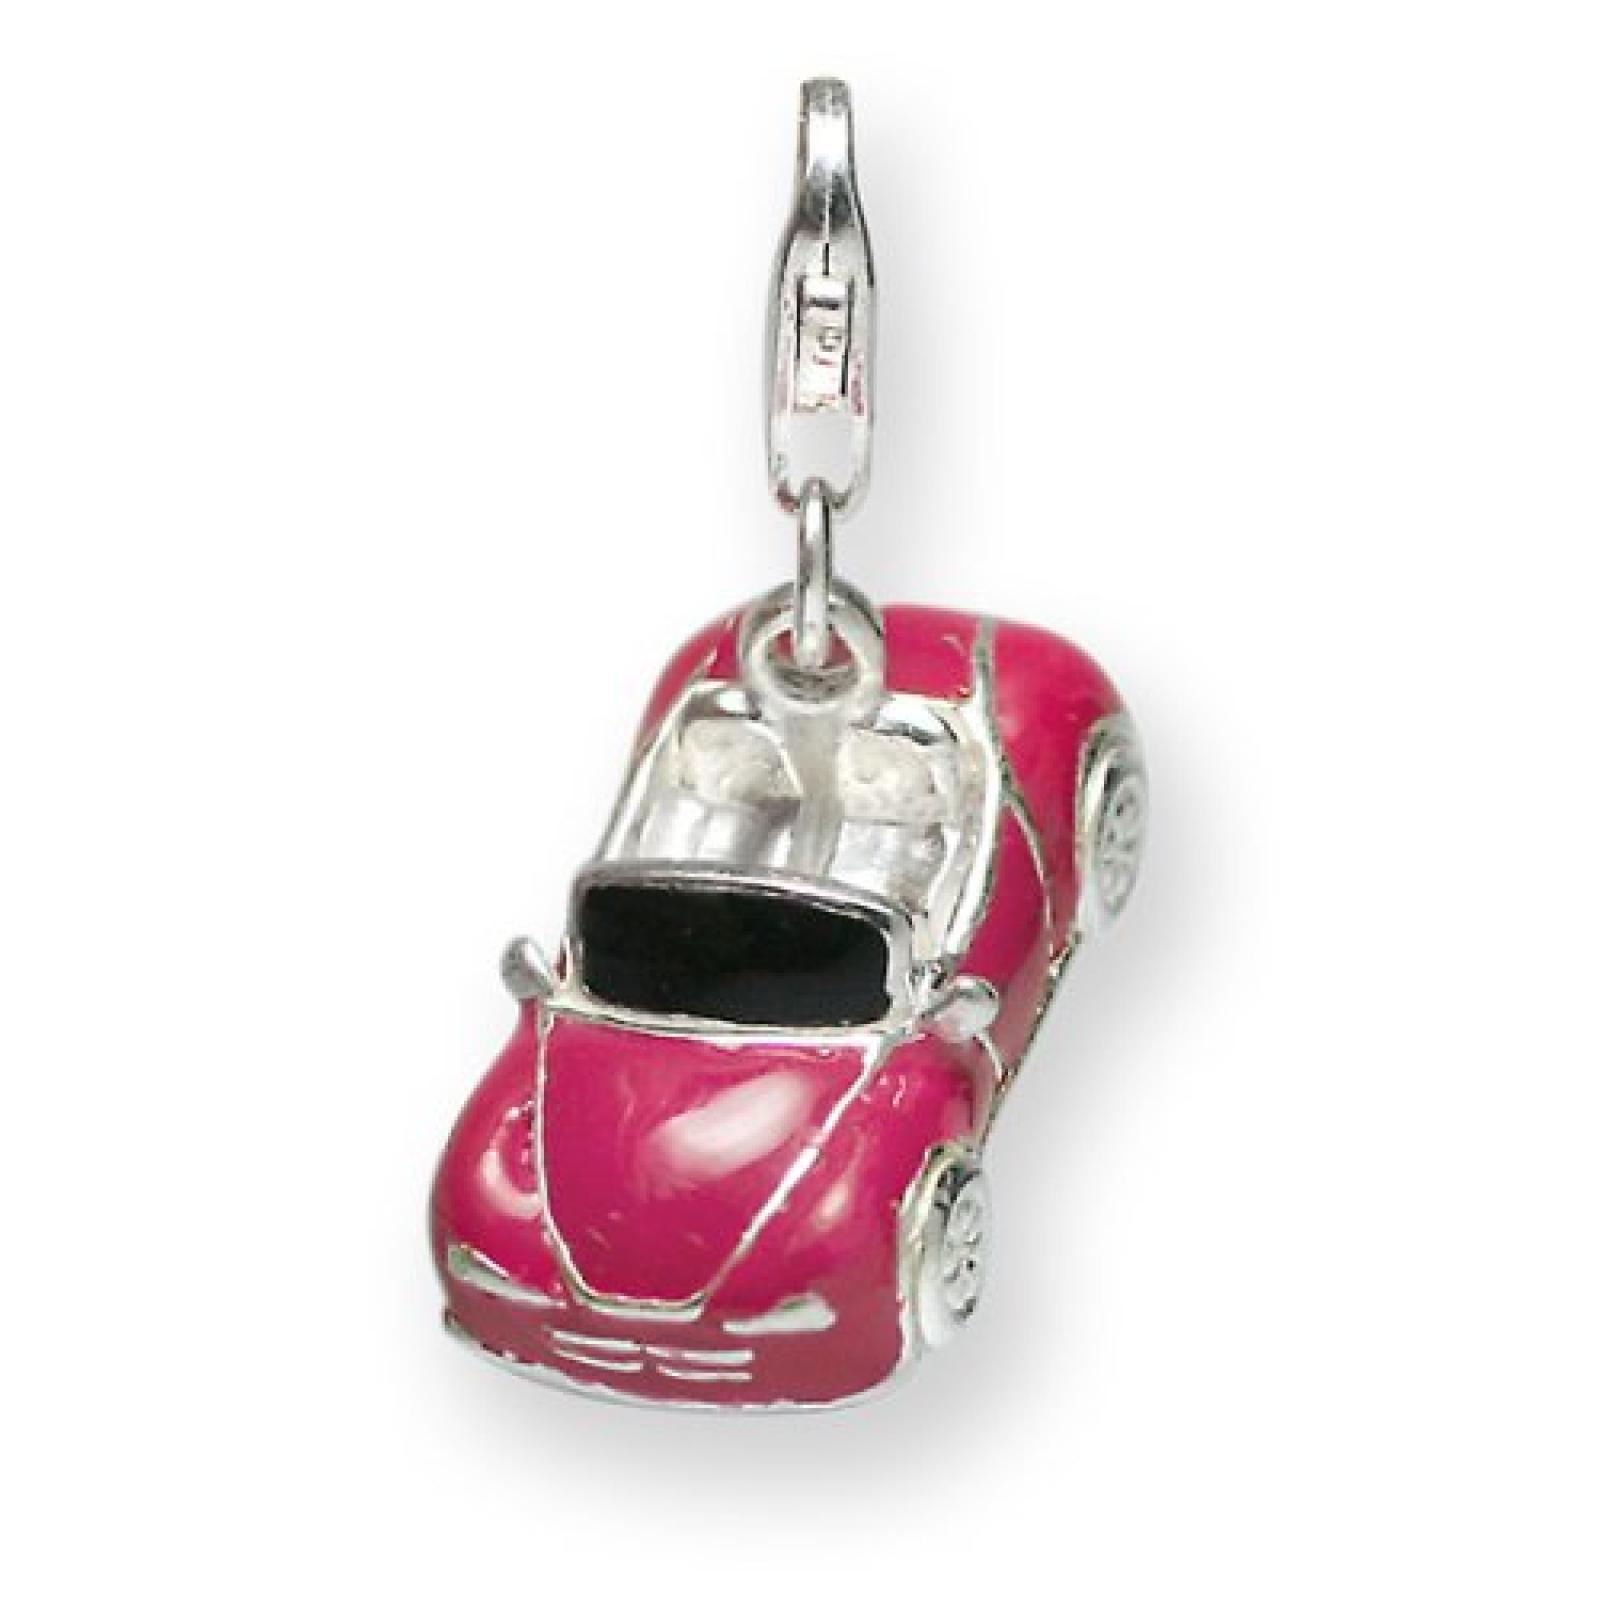 Rafaela Donata Charm Collection Damen-Charm Cabrio 925 Sterling Silber Zirkonia Emaille pink / 60600095 